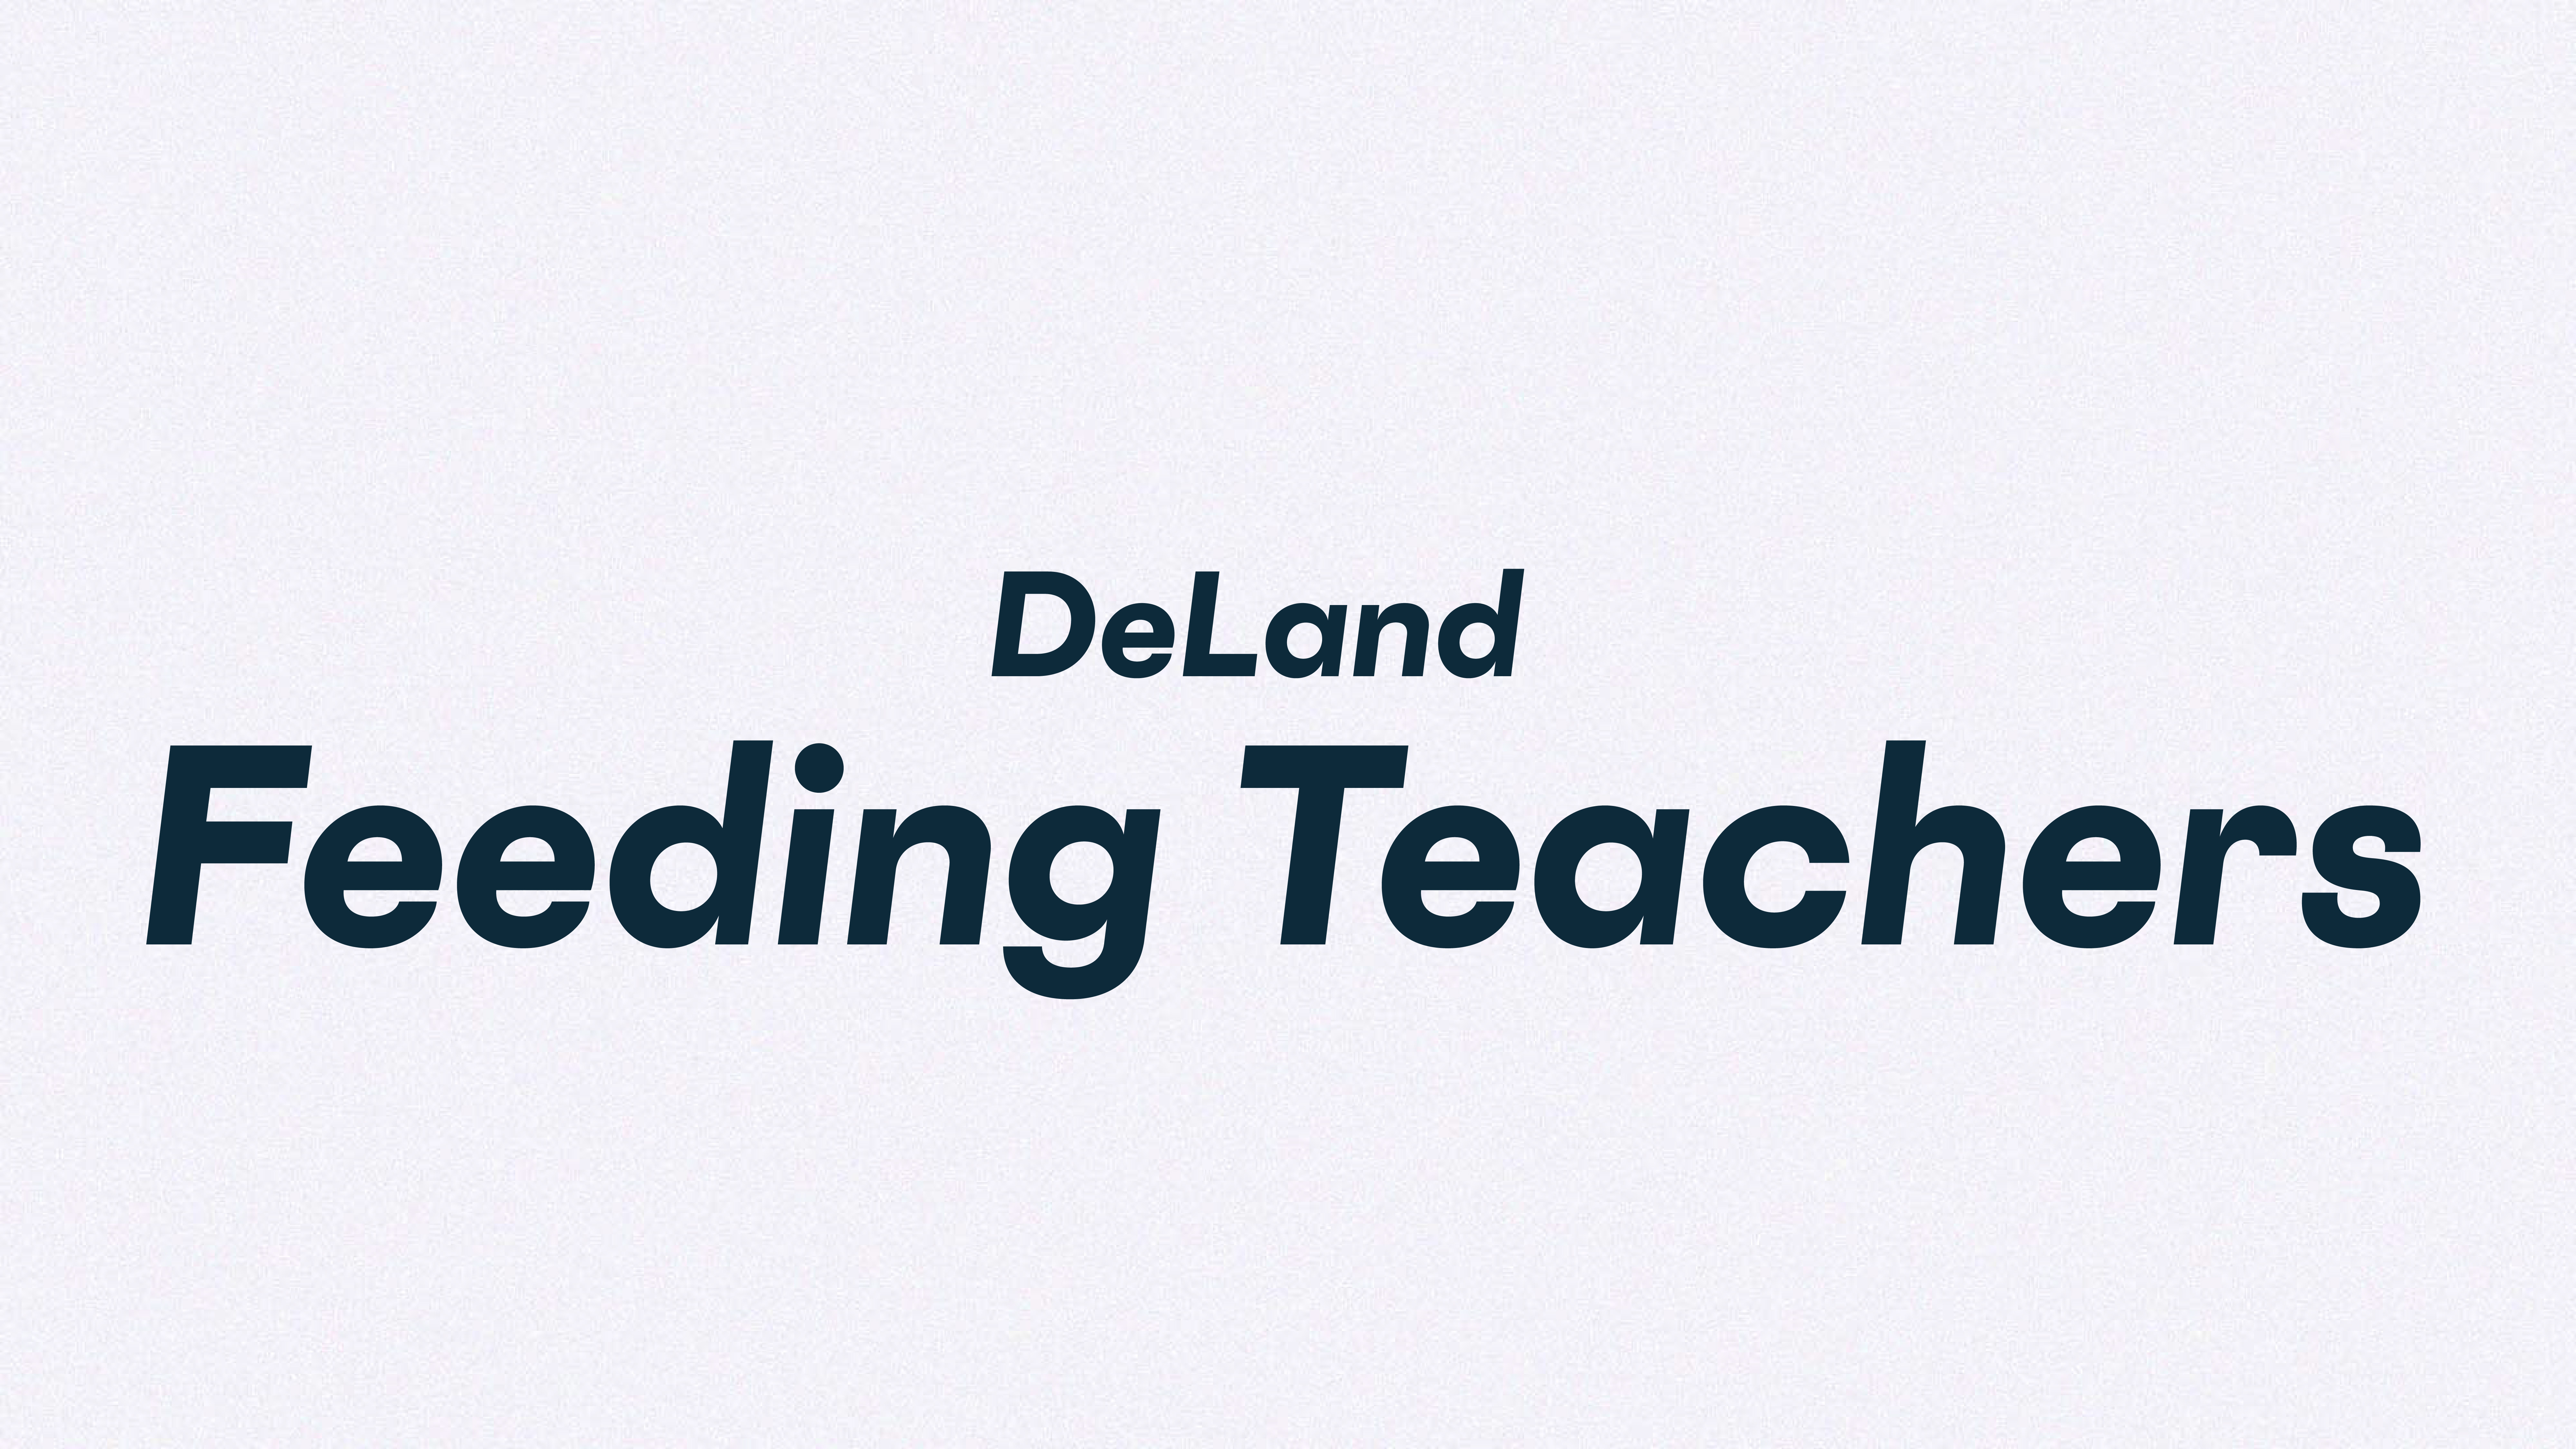 Feeding Teachers